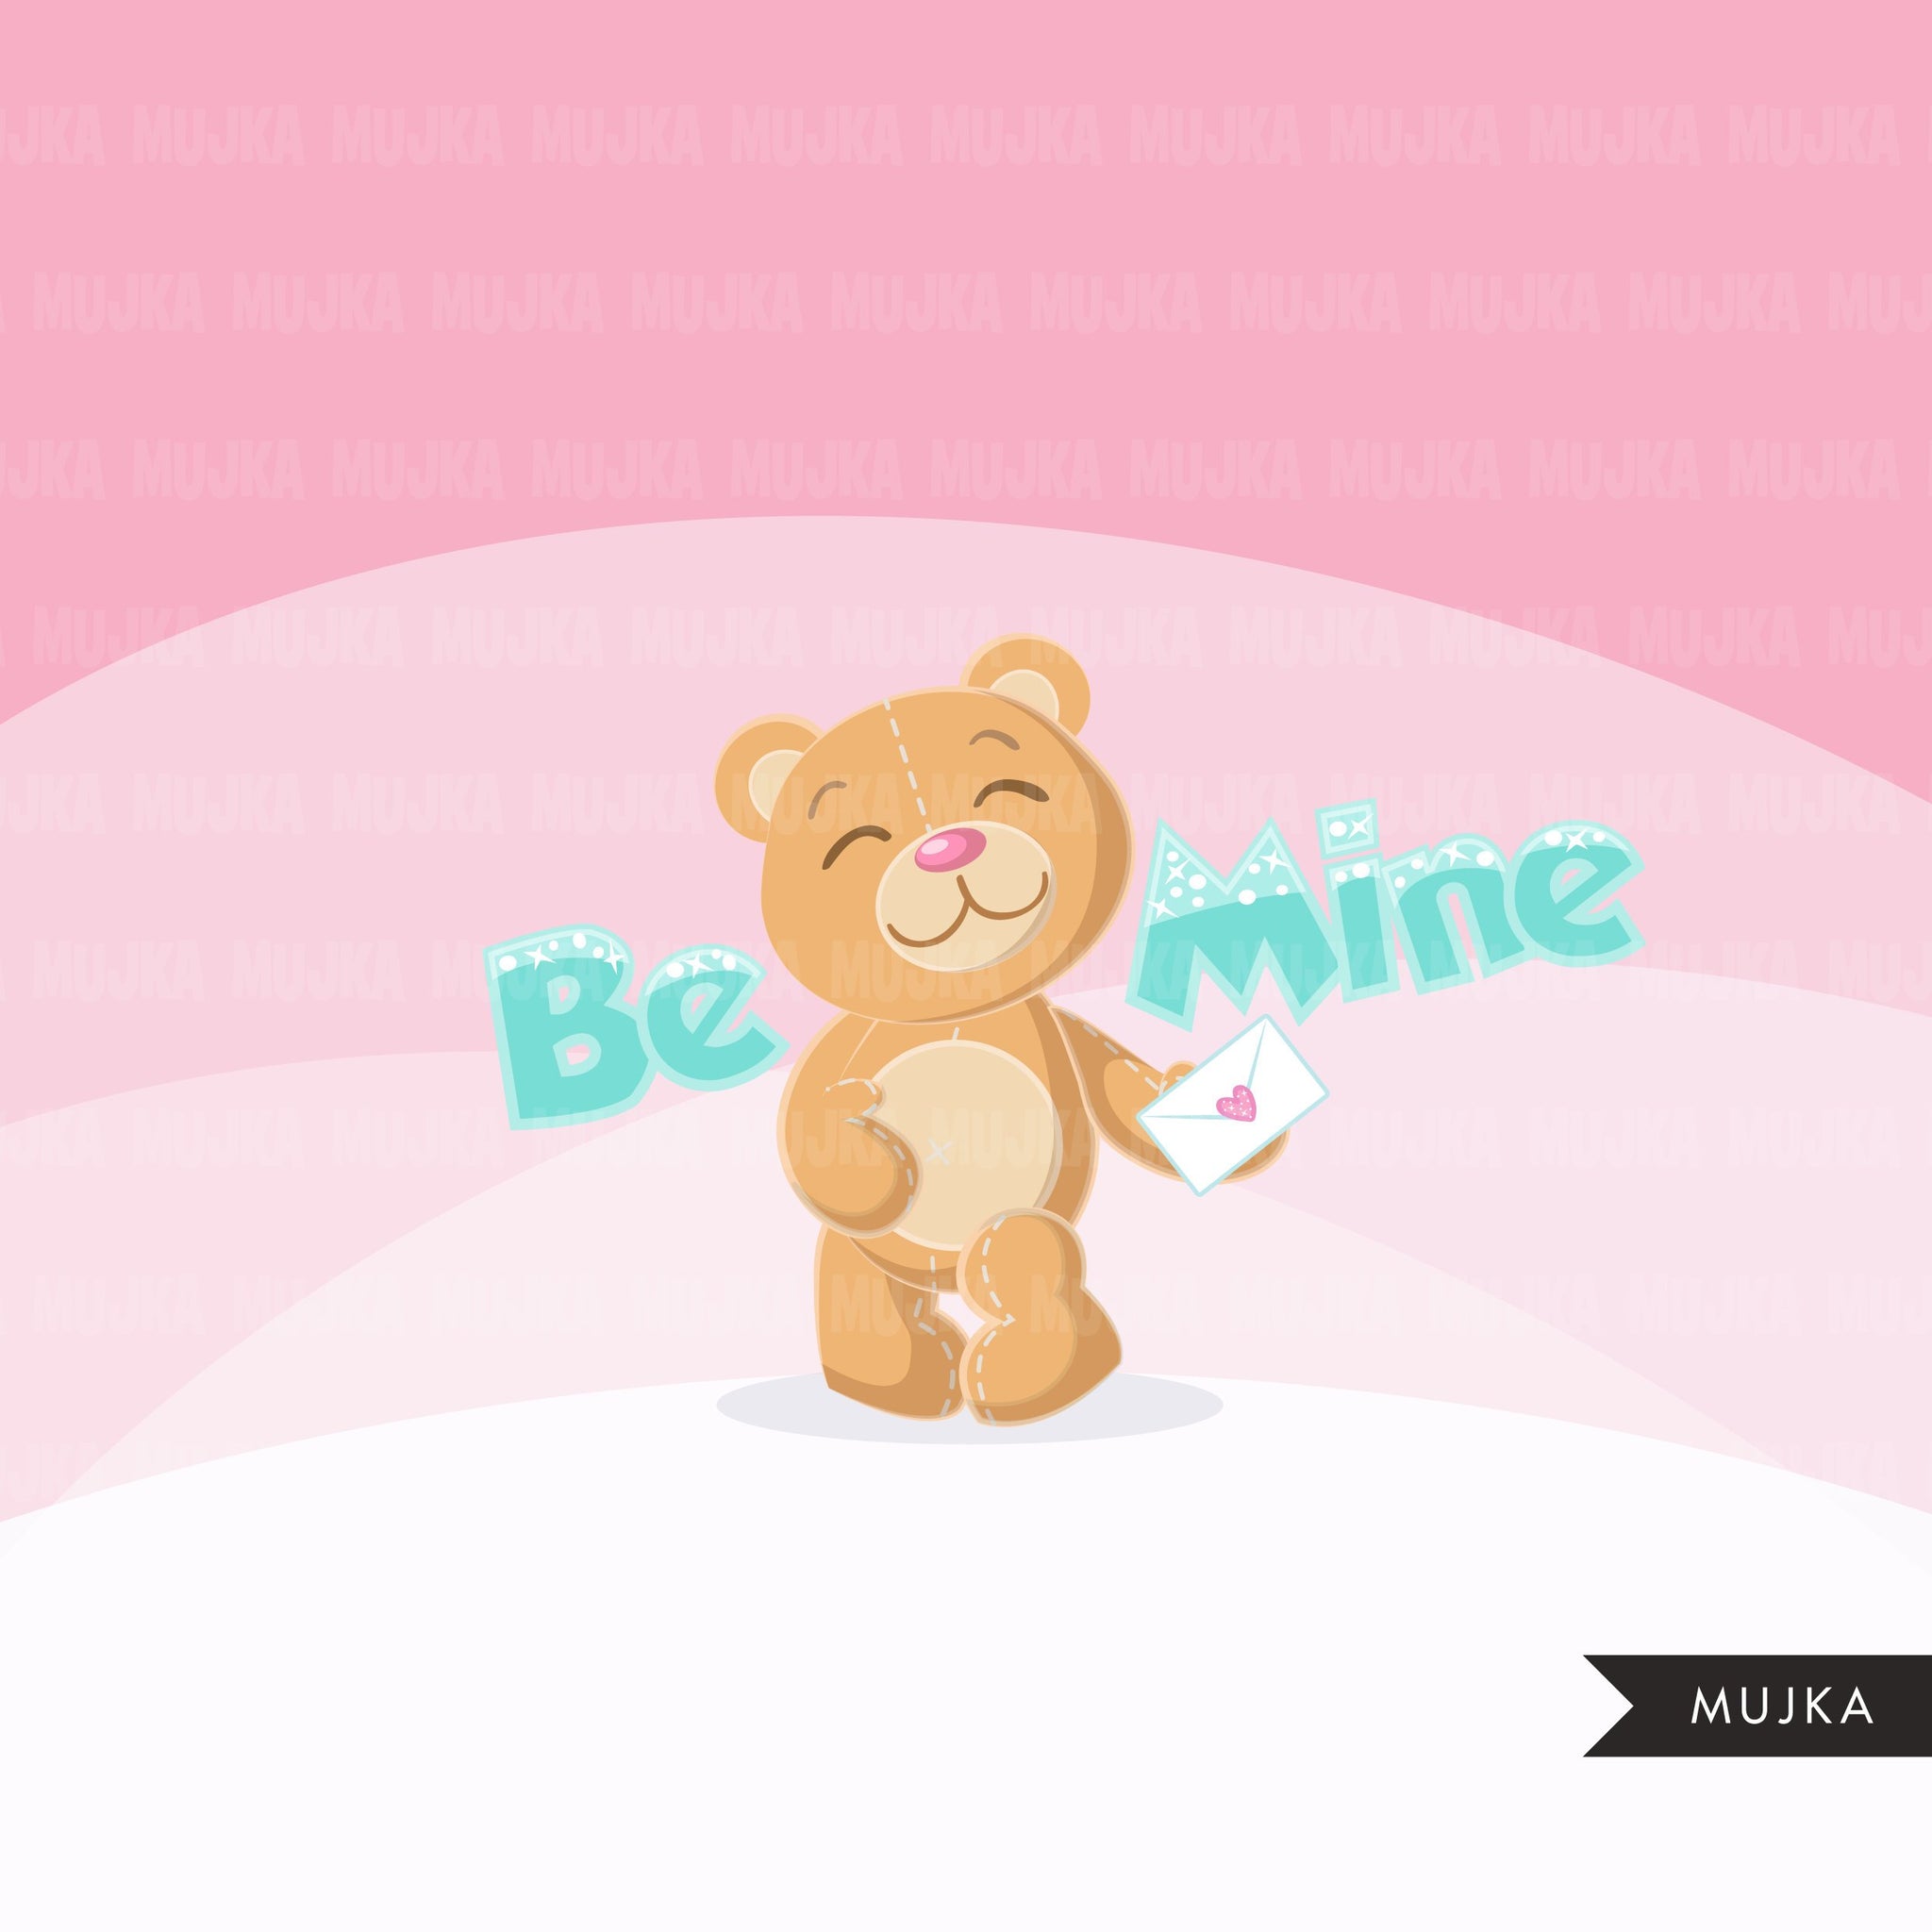 Valentine's Day Teddy bear clipart